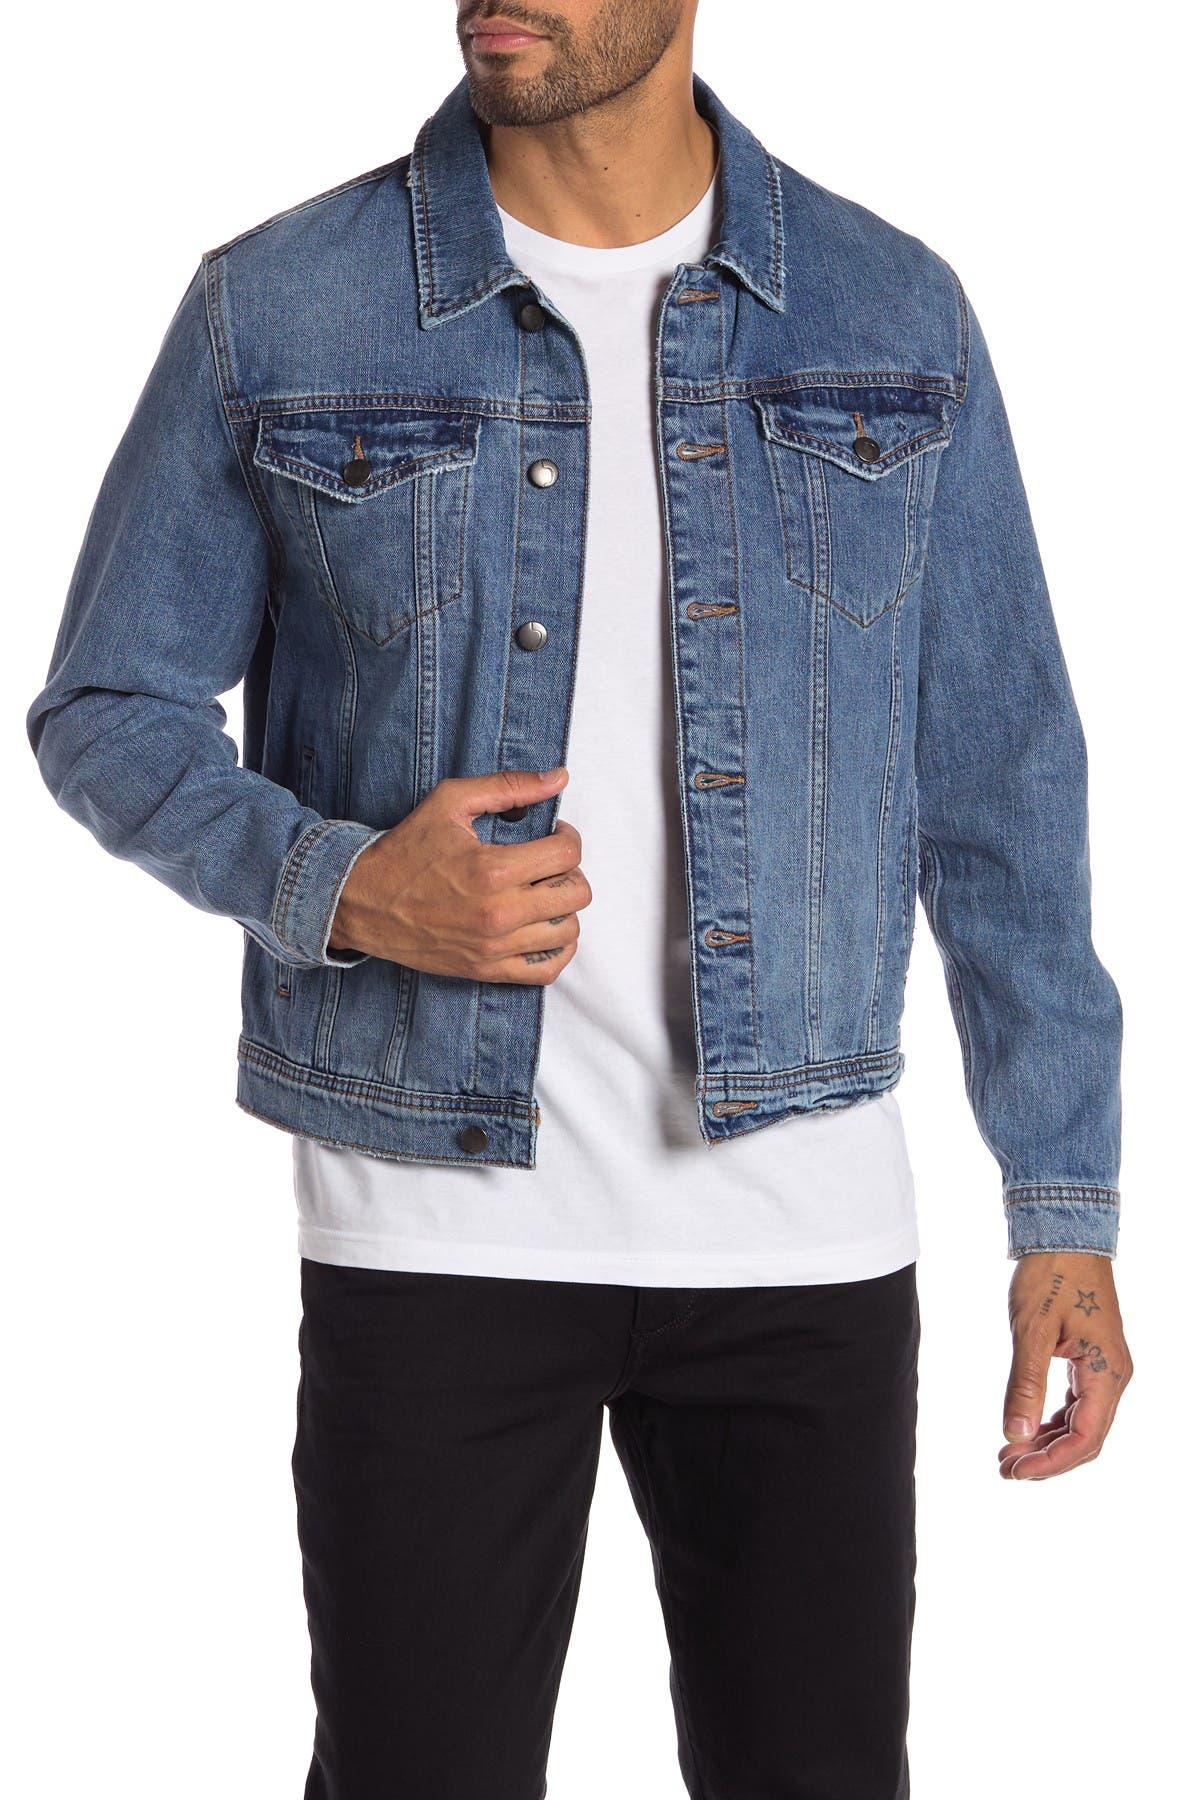 nordstrom rack jean jacket